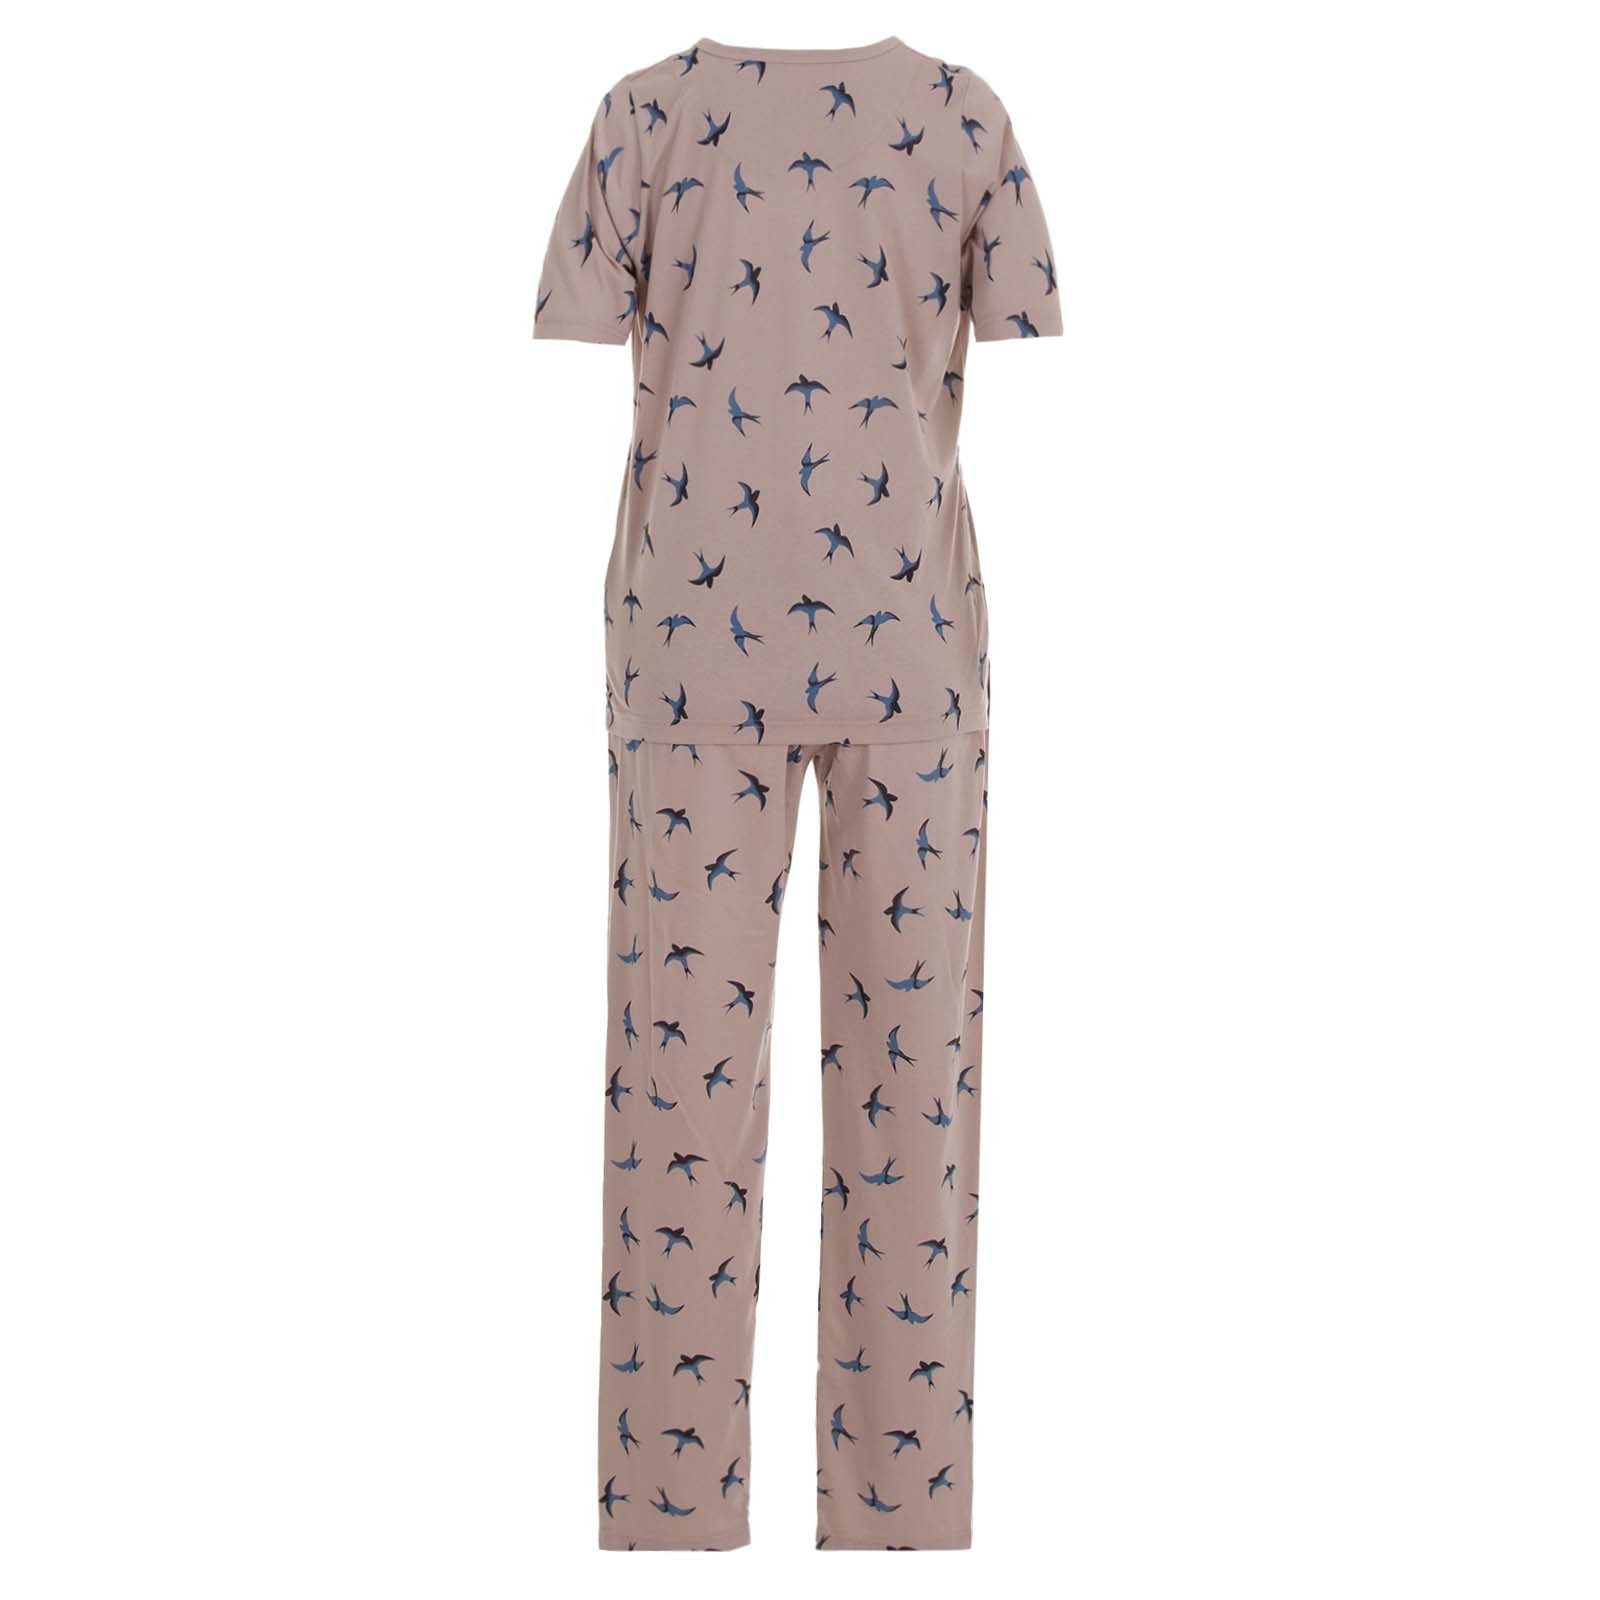 Schwalbe zeitlos - Kurzarm Pyjama sand Set Schlafanzug